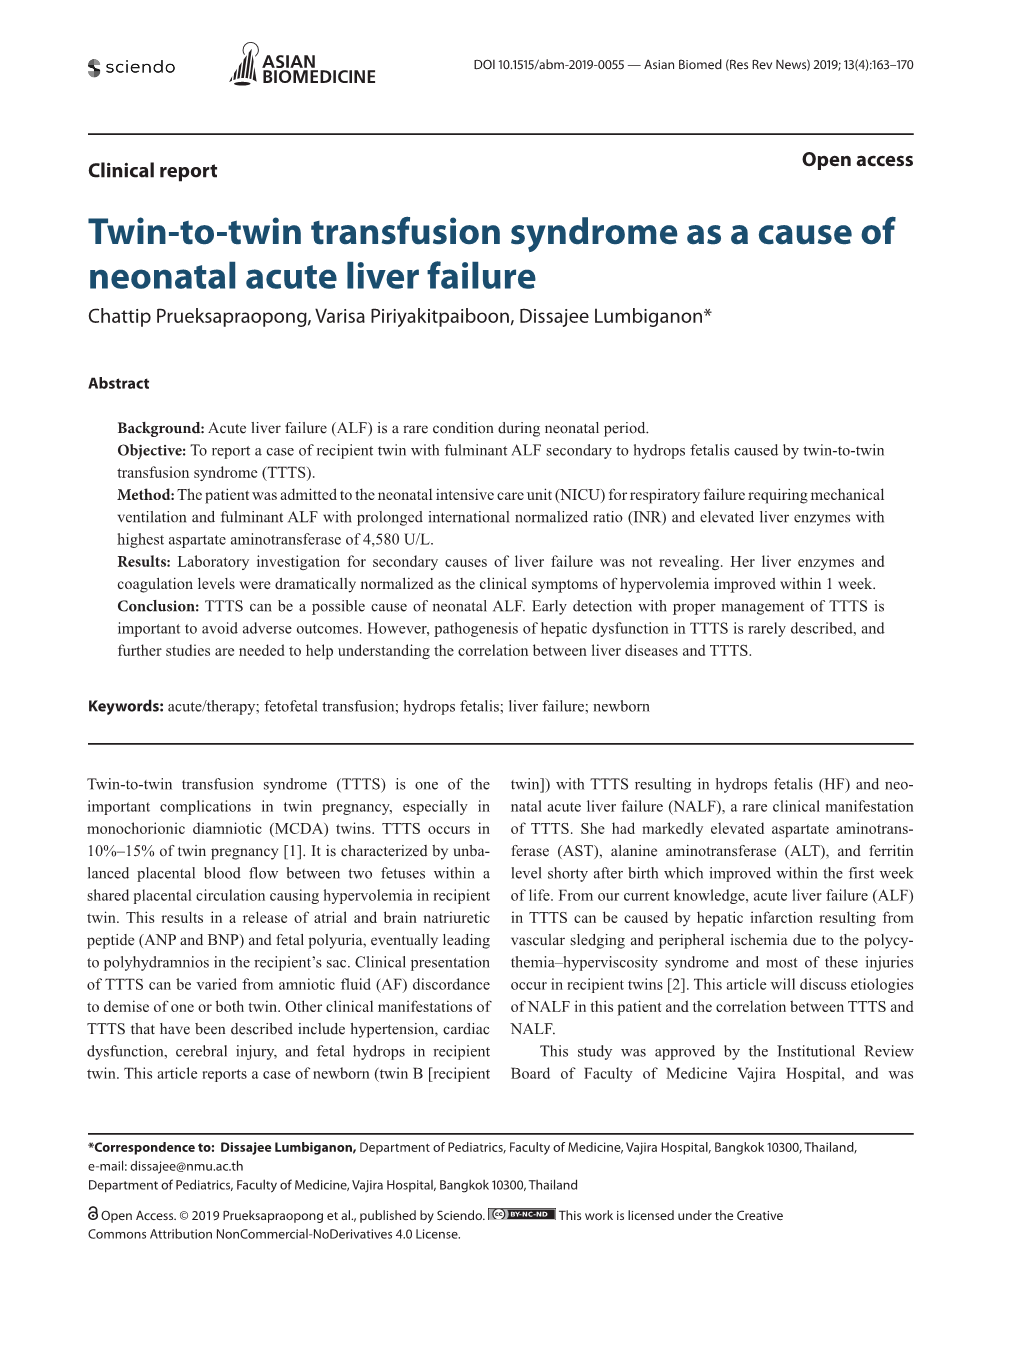 Twin-To-Twin Transfusion Syndrome As a Cause of Neonatal Acute Liver Failure Chattip Prueksapraopong, Varisa Piriyakitpaiboon, Dissajee Lumbiganon*